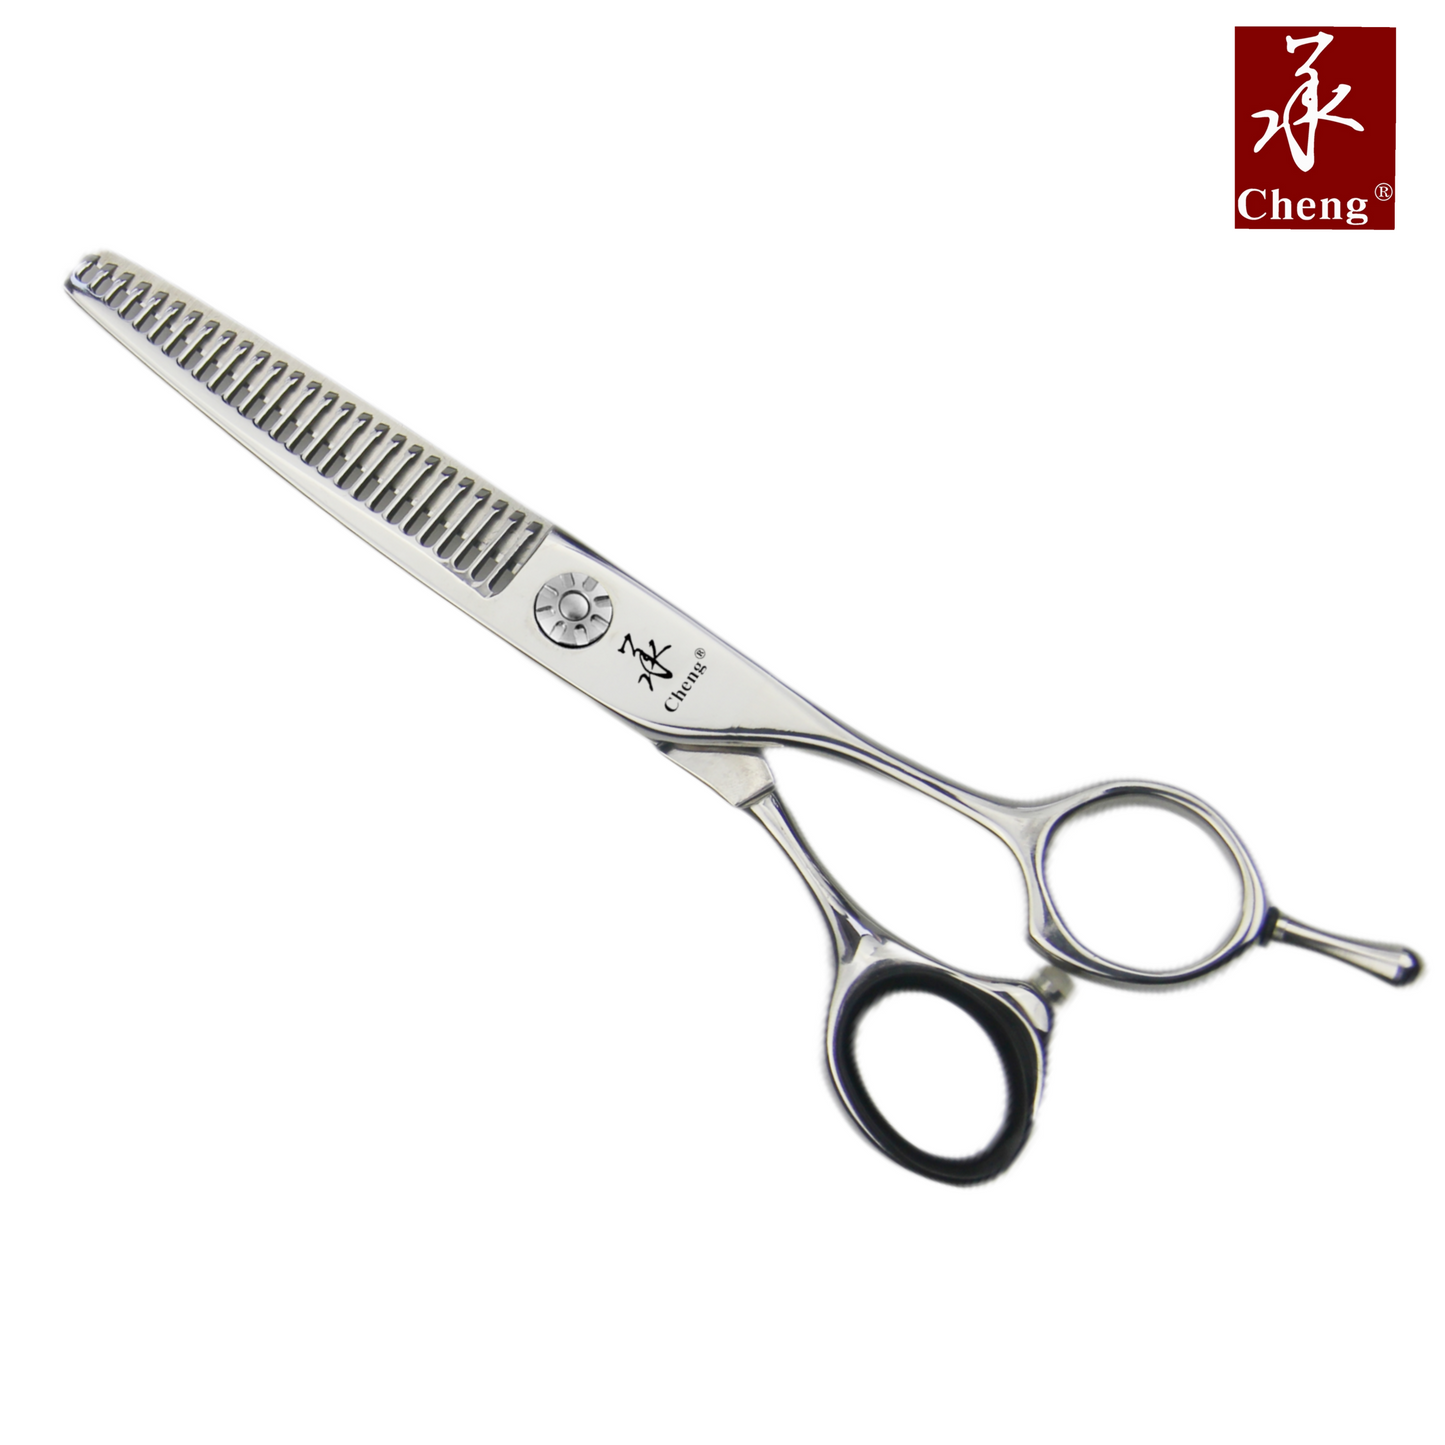 BK-525T Hair Cutting Scissors Professional Hairdressing Shear 5.25Inch